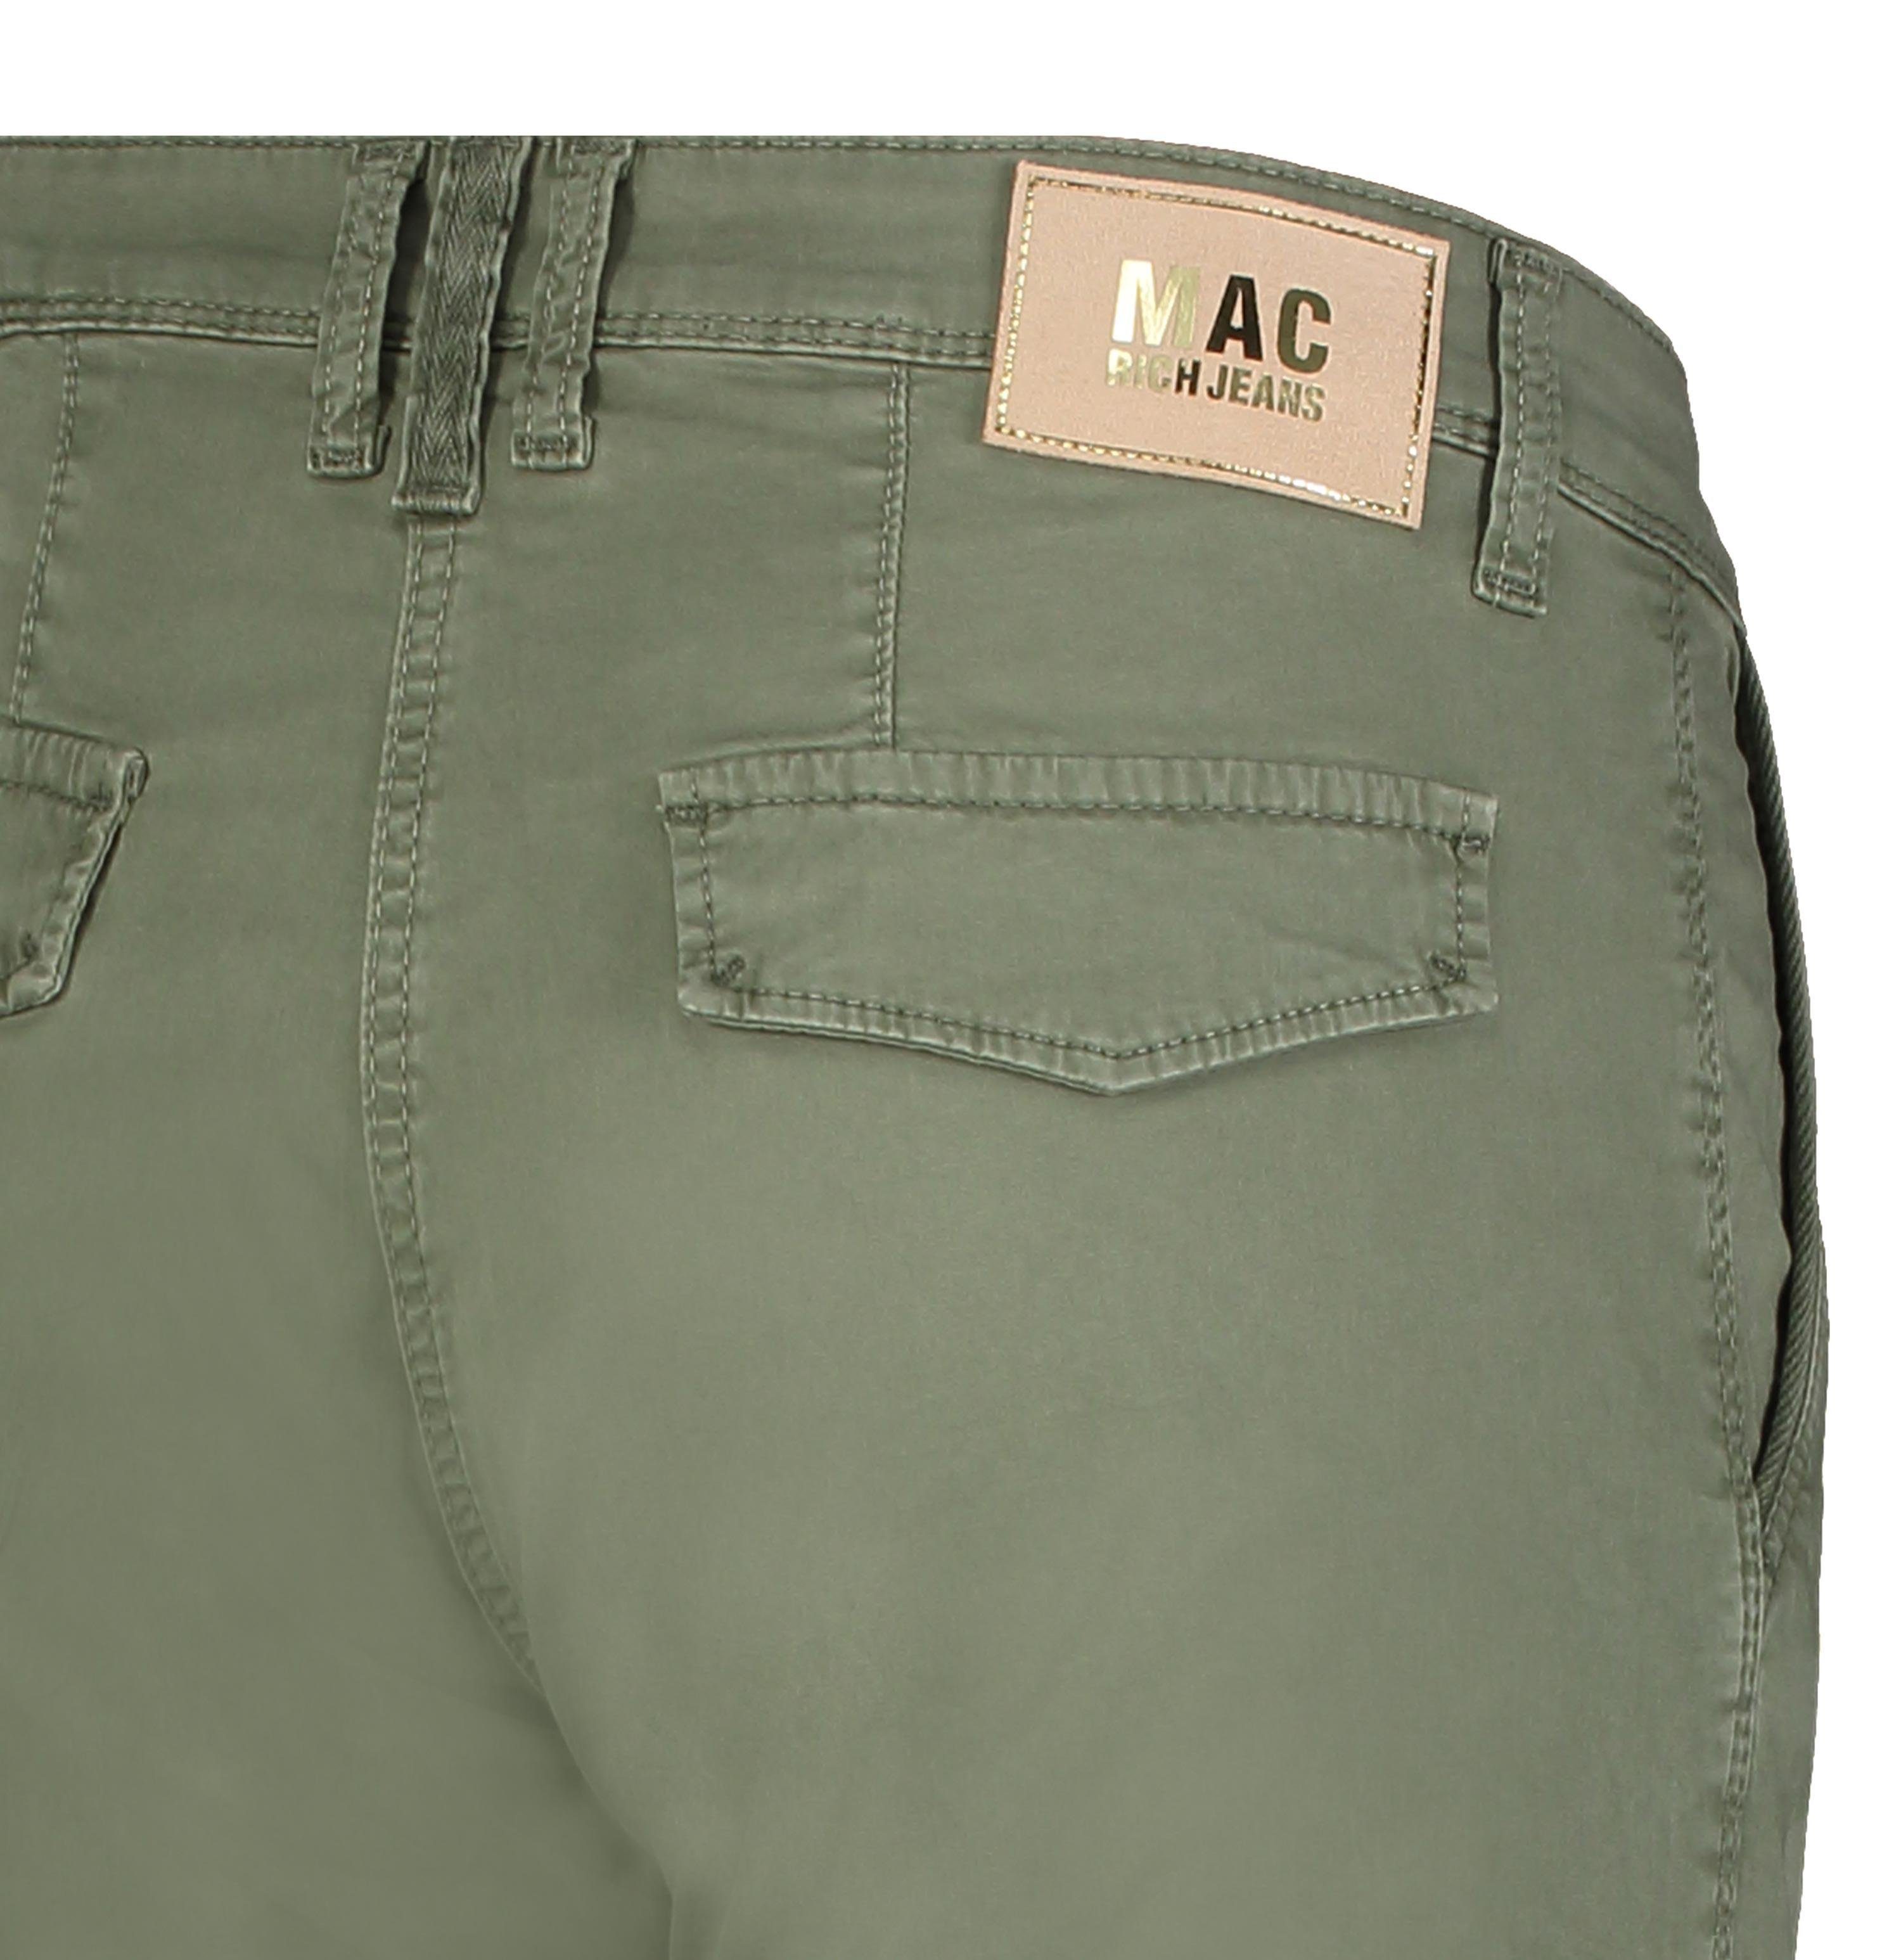 RICH 645R 2377-00-0430L Stretch-Jeans light green MAC MAC PPT summer